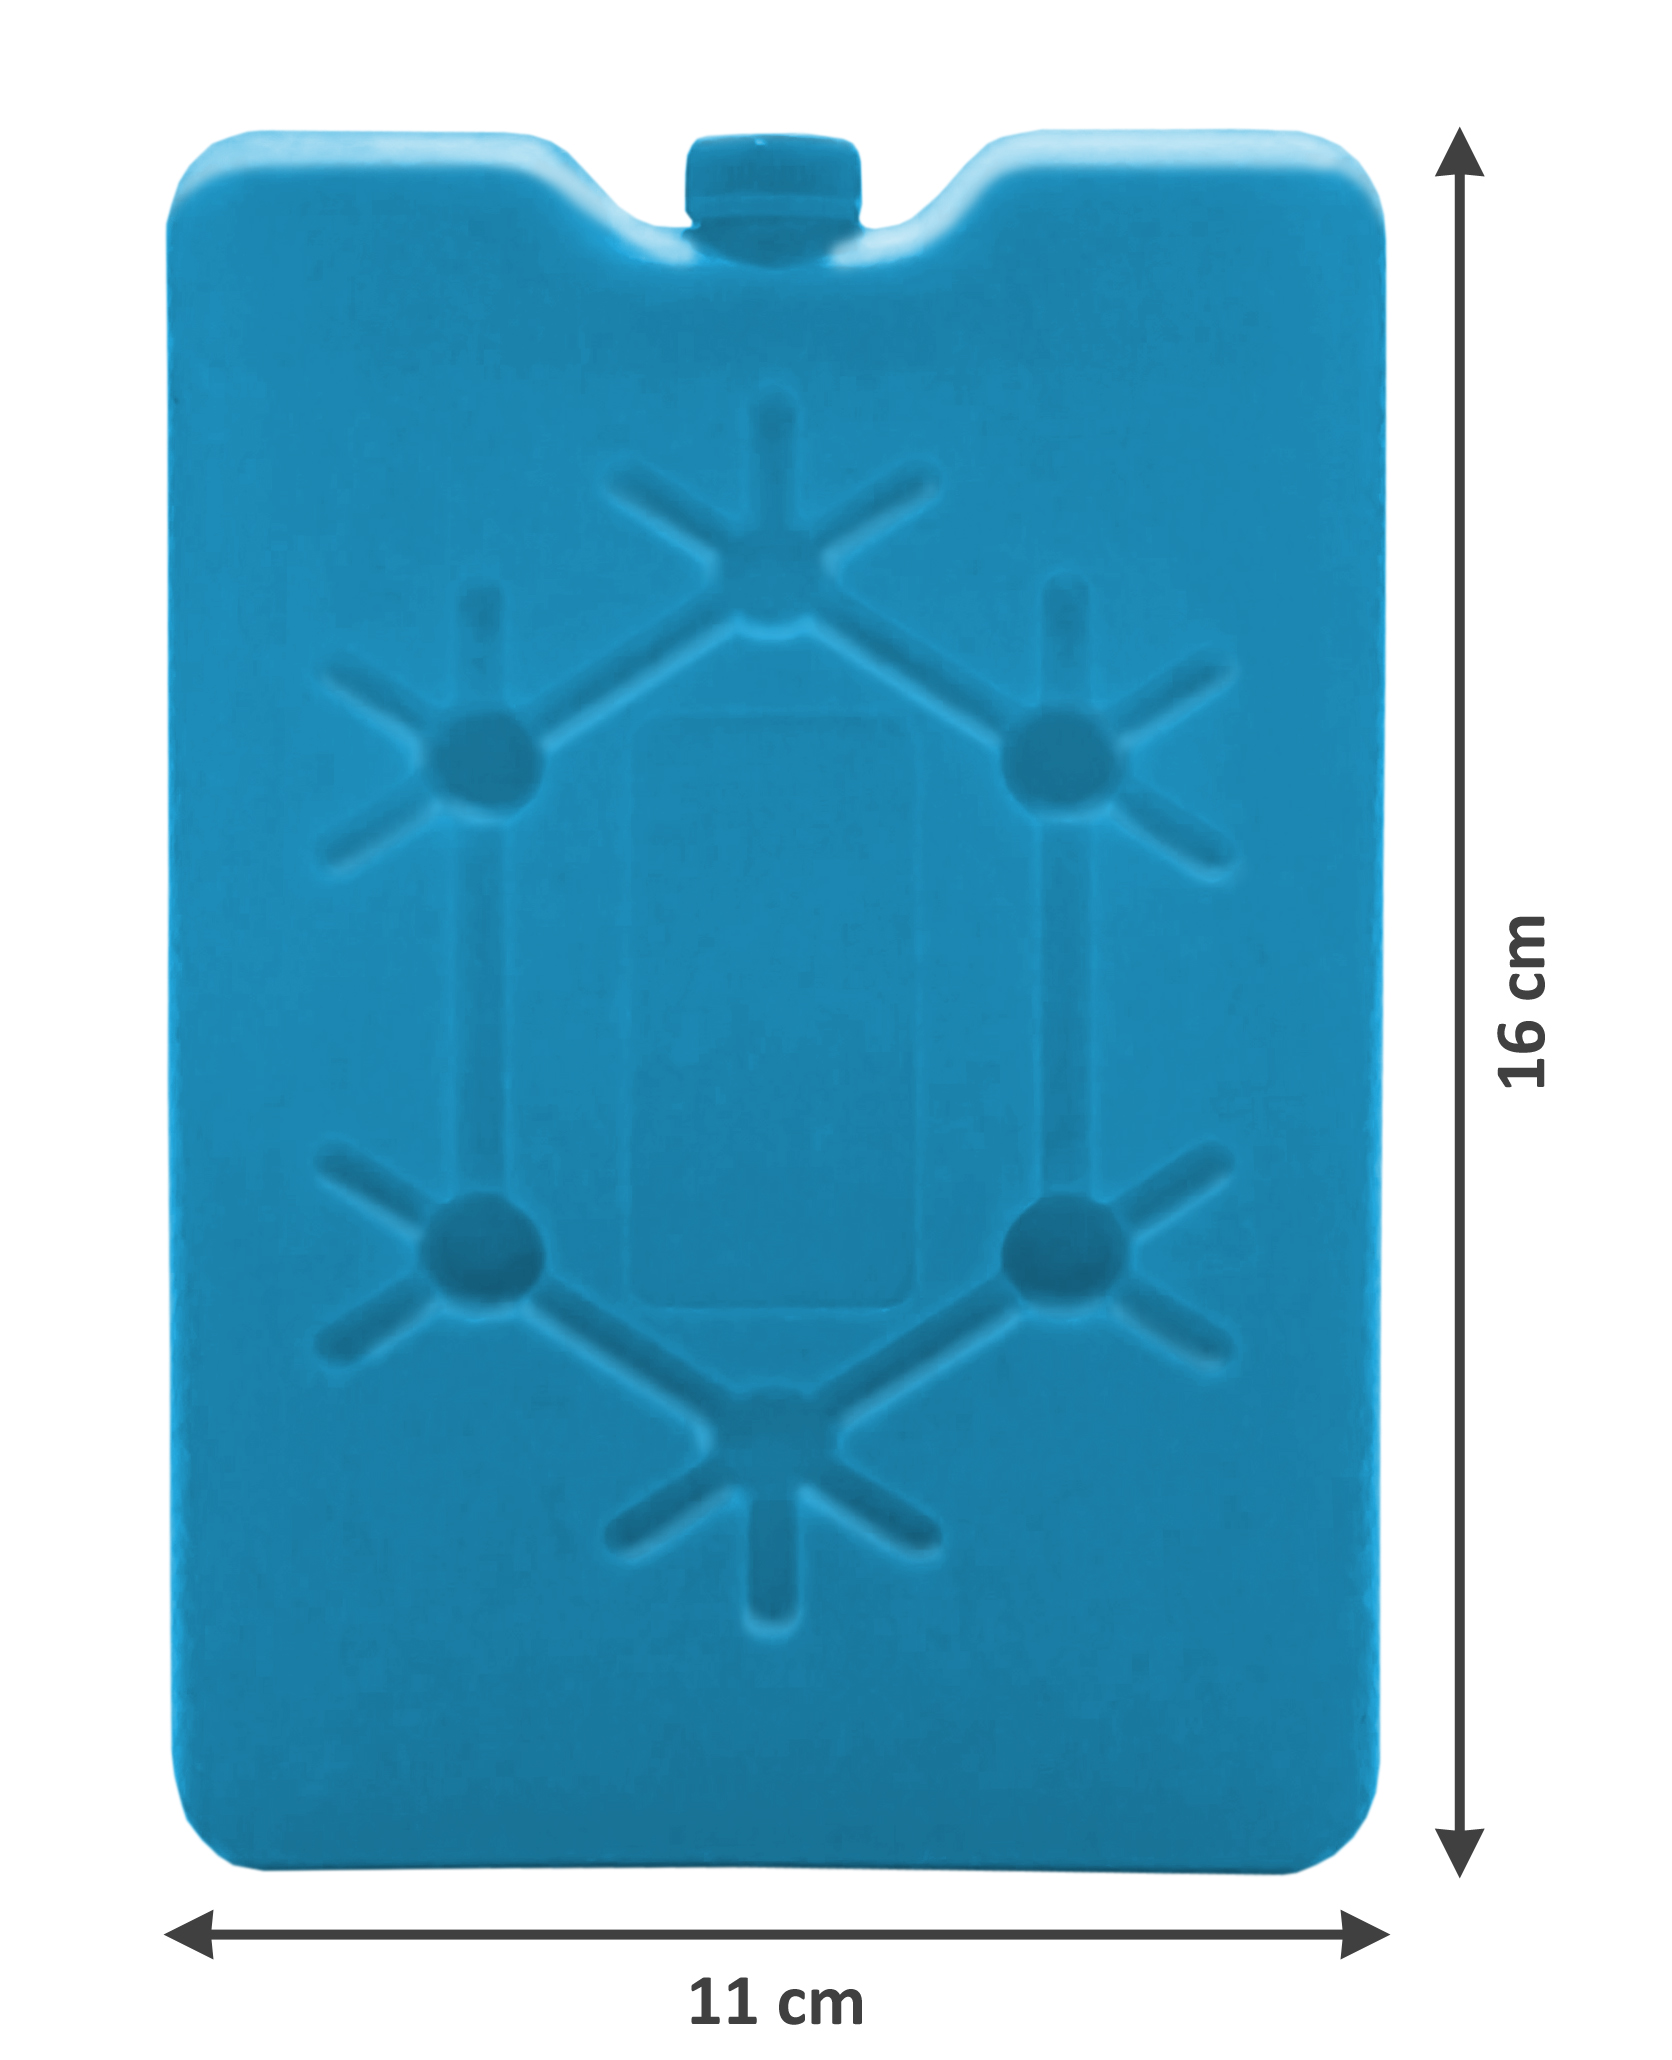 Kühlakkus 2er Set in blau - je 16 x 11 cm / 265 ml - Kühl Elemente mit flachem Design